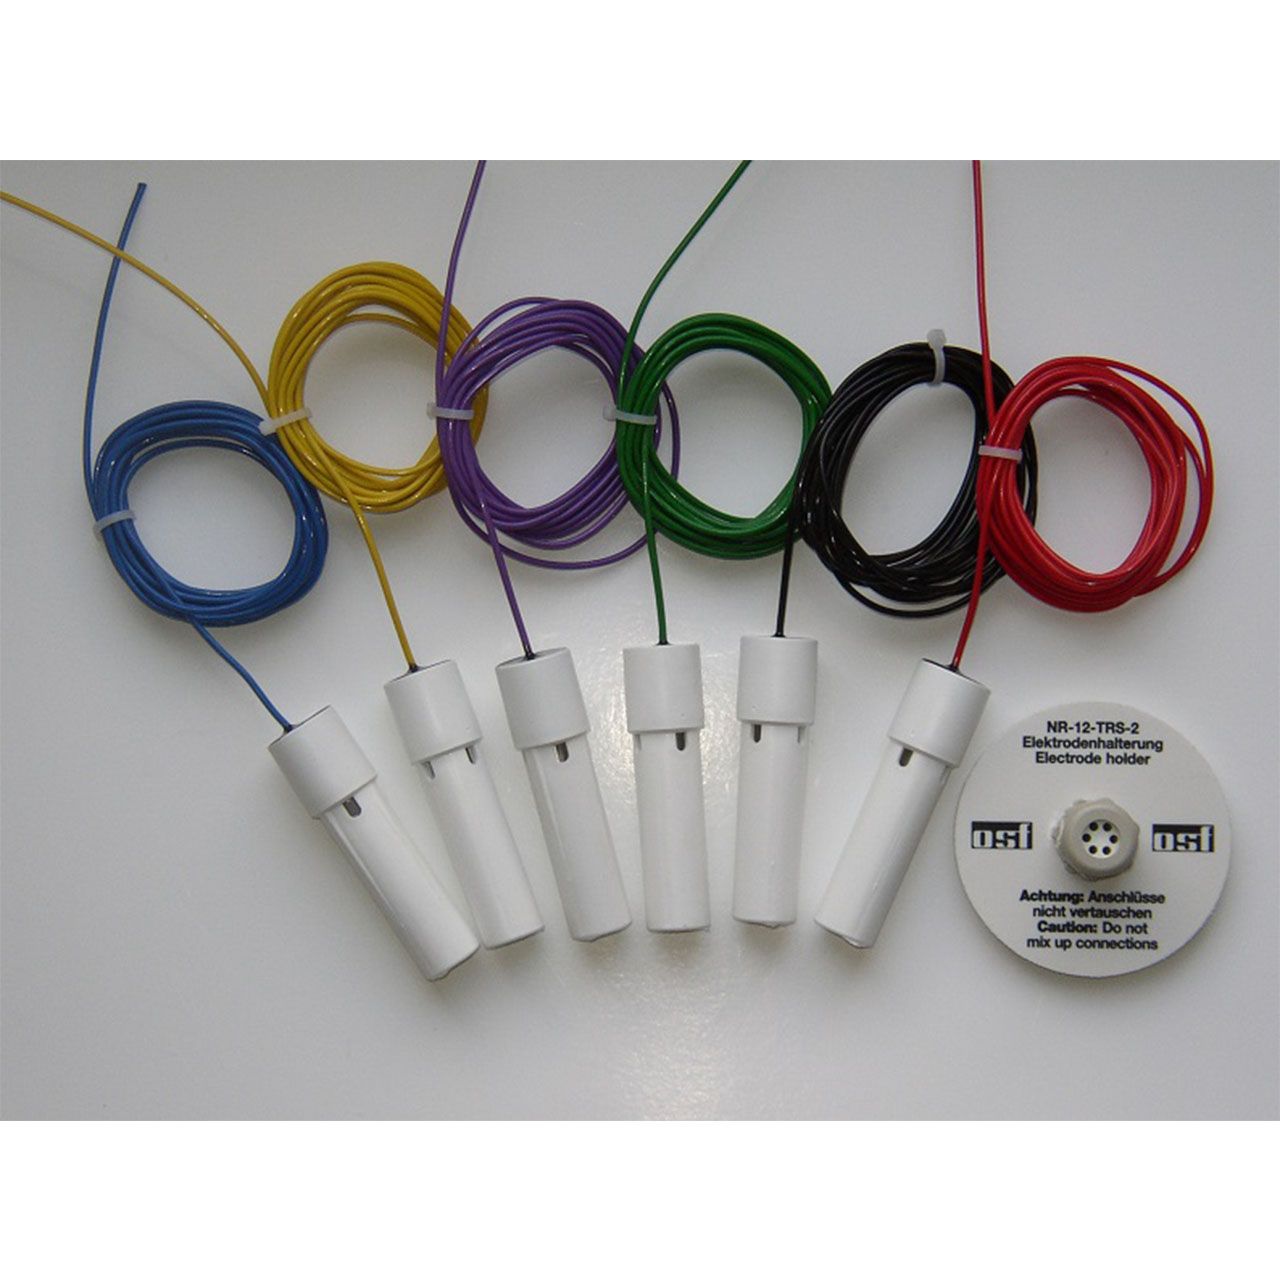 Elektrodensatz 6-fach für Niveauregler NR-12-TRS-3 aus V2A